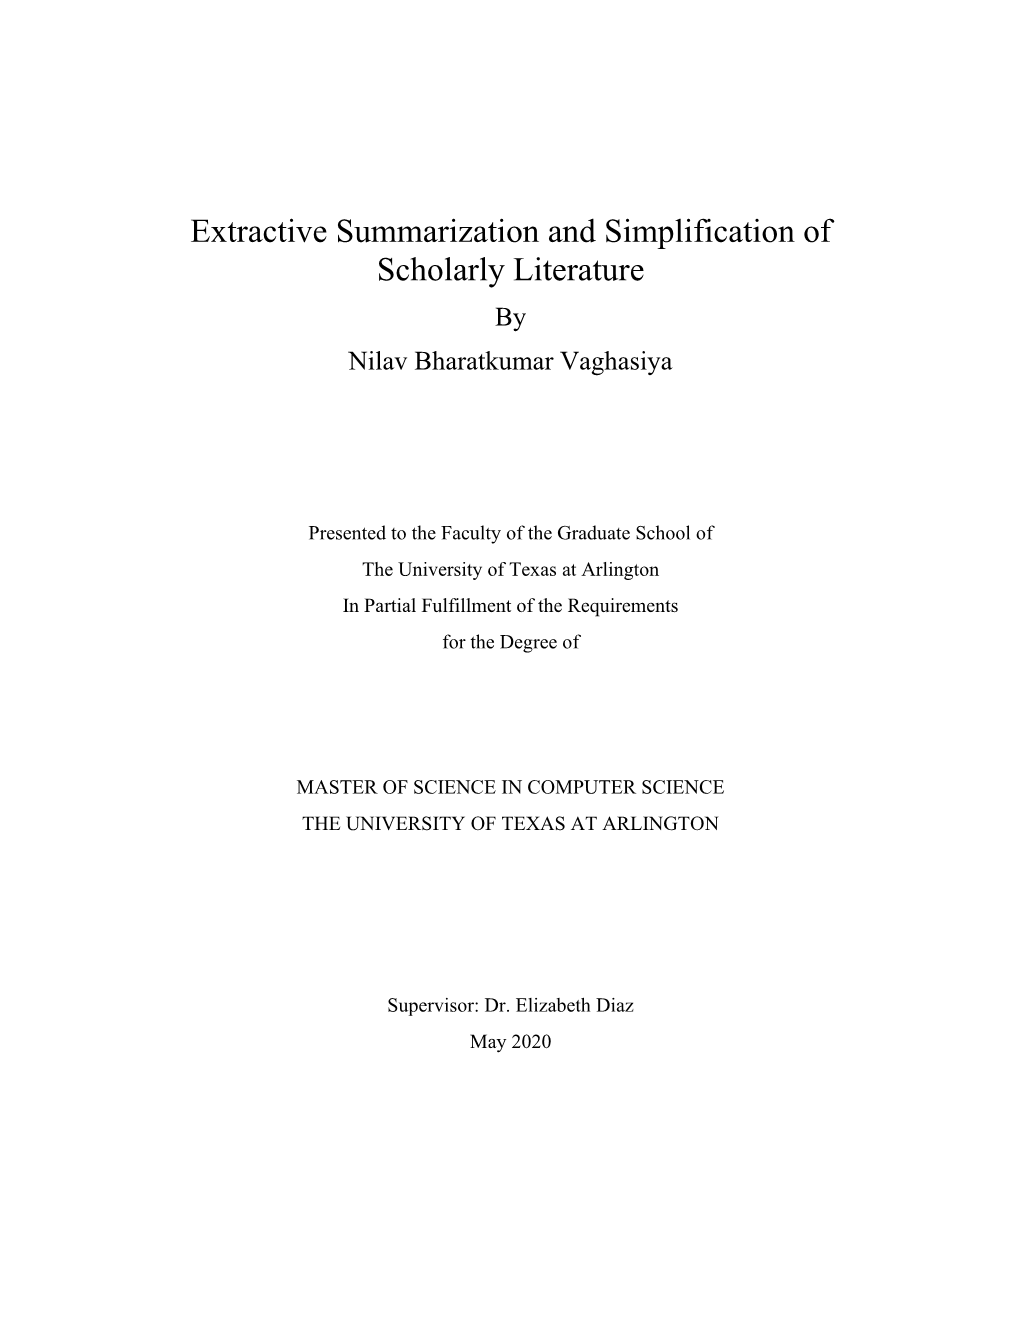 Extractive Summarization and Simplification of Scholarly Literature by Nilav Bharatkumar Vaghasiya